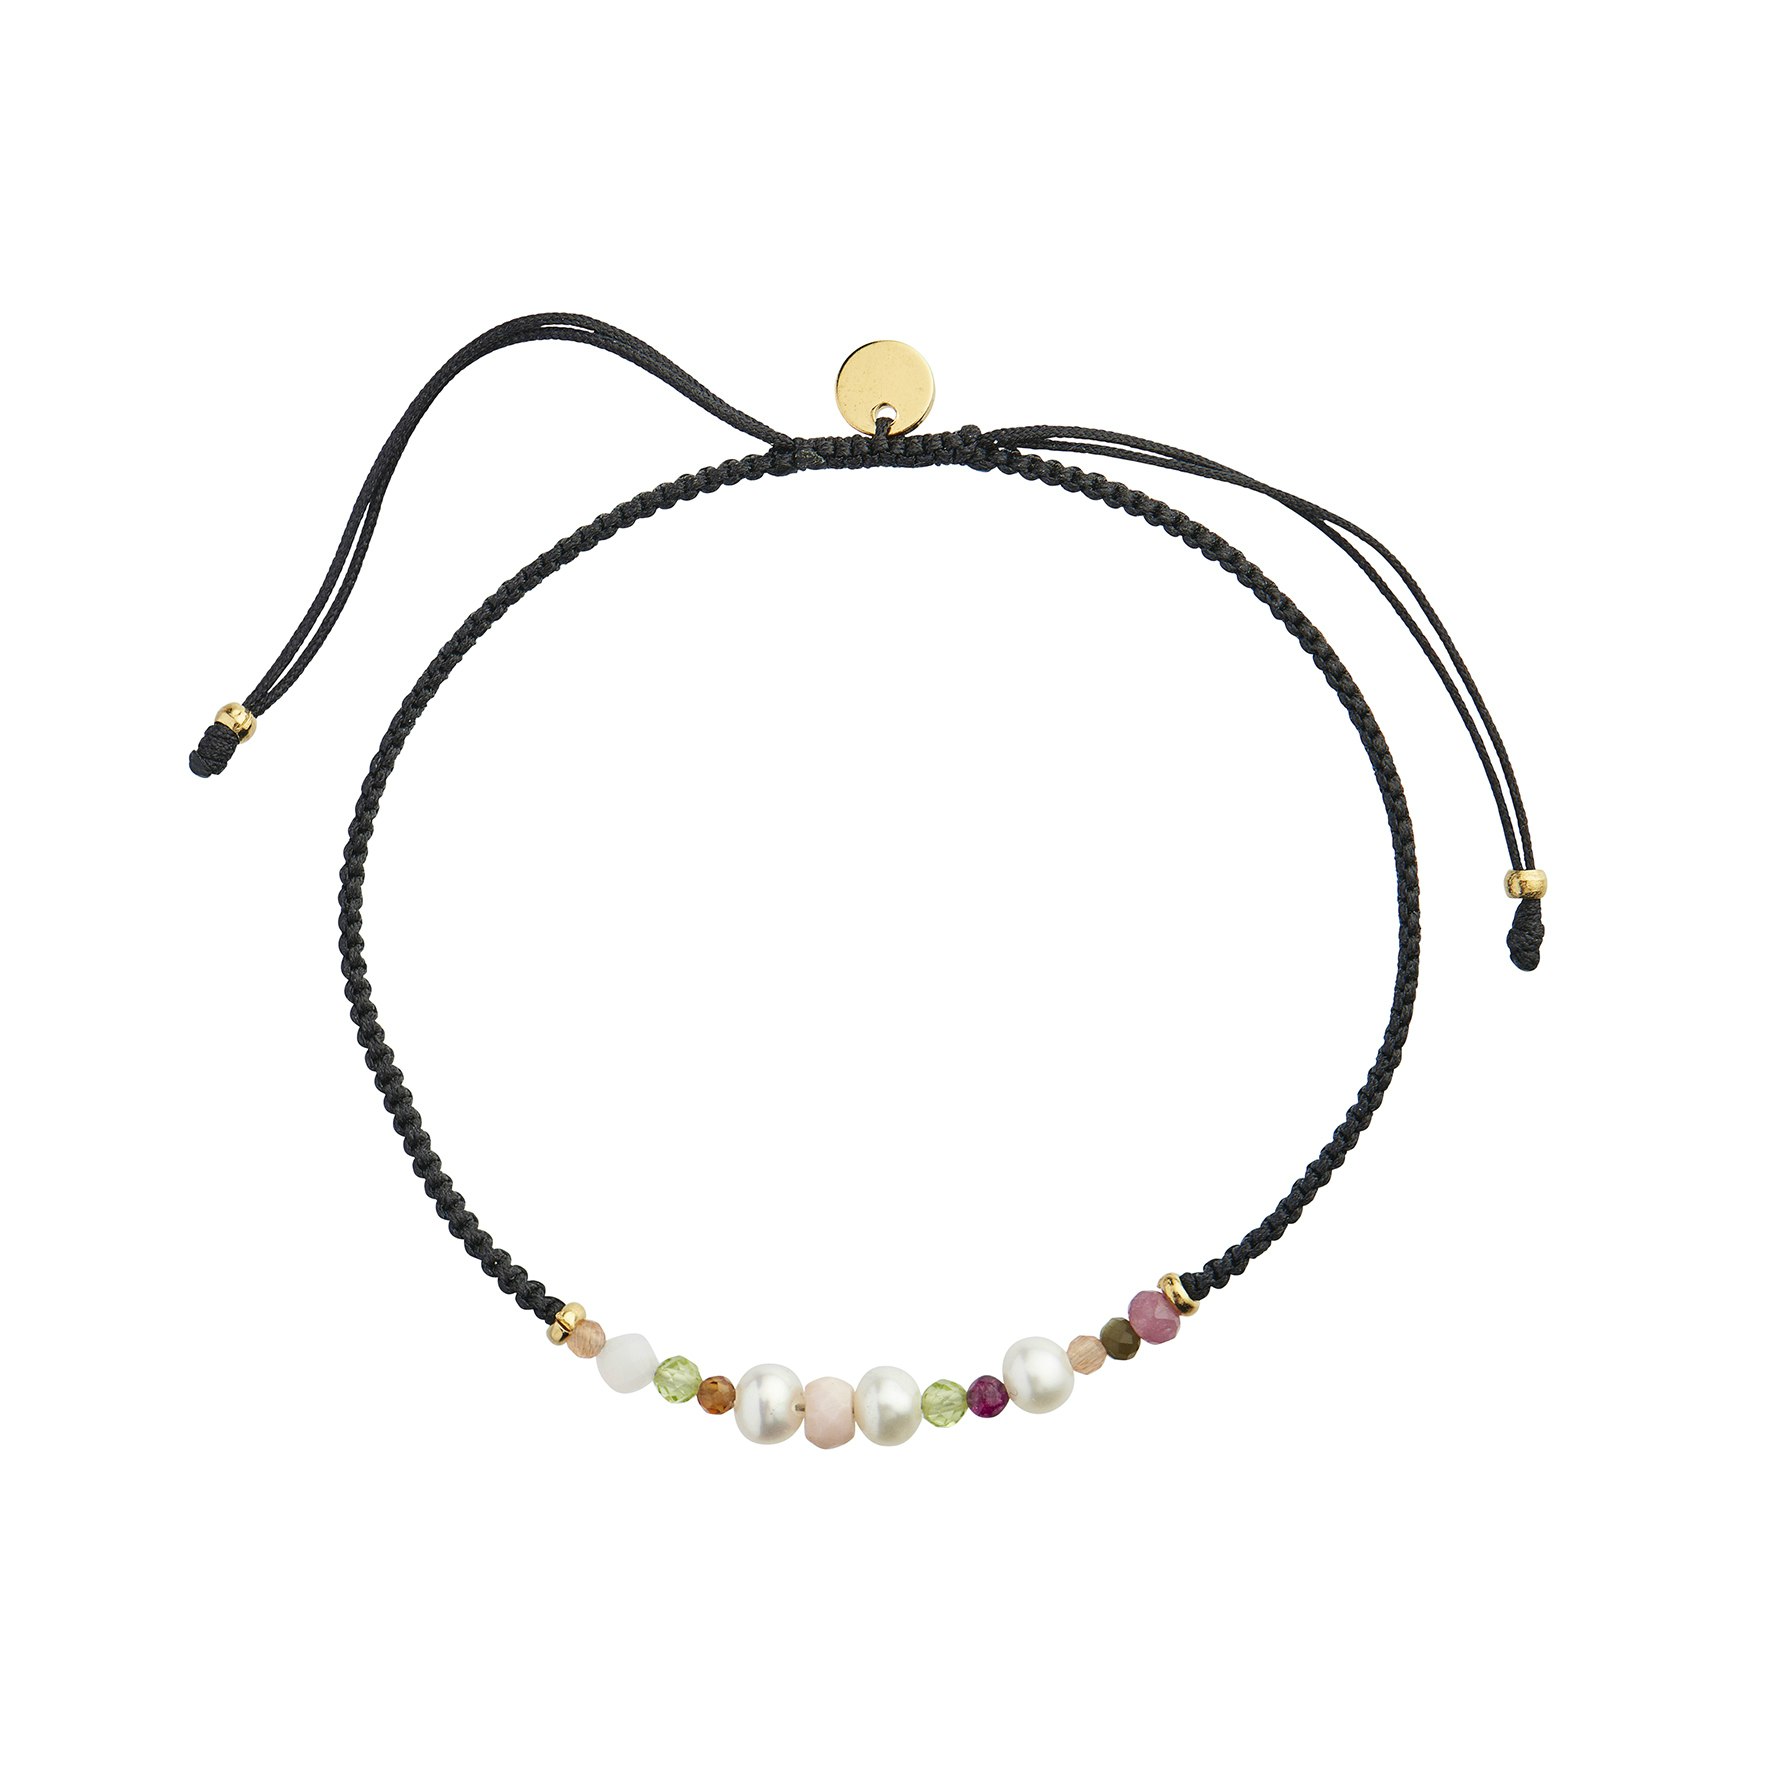 Candy Bracelet - White Forest Mix & Black Ribbon van STINE A Jewelry in Nylon